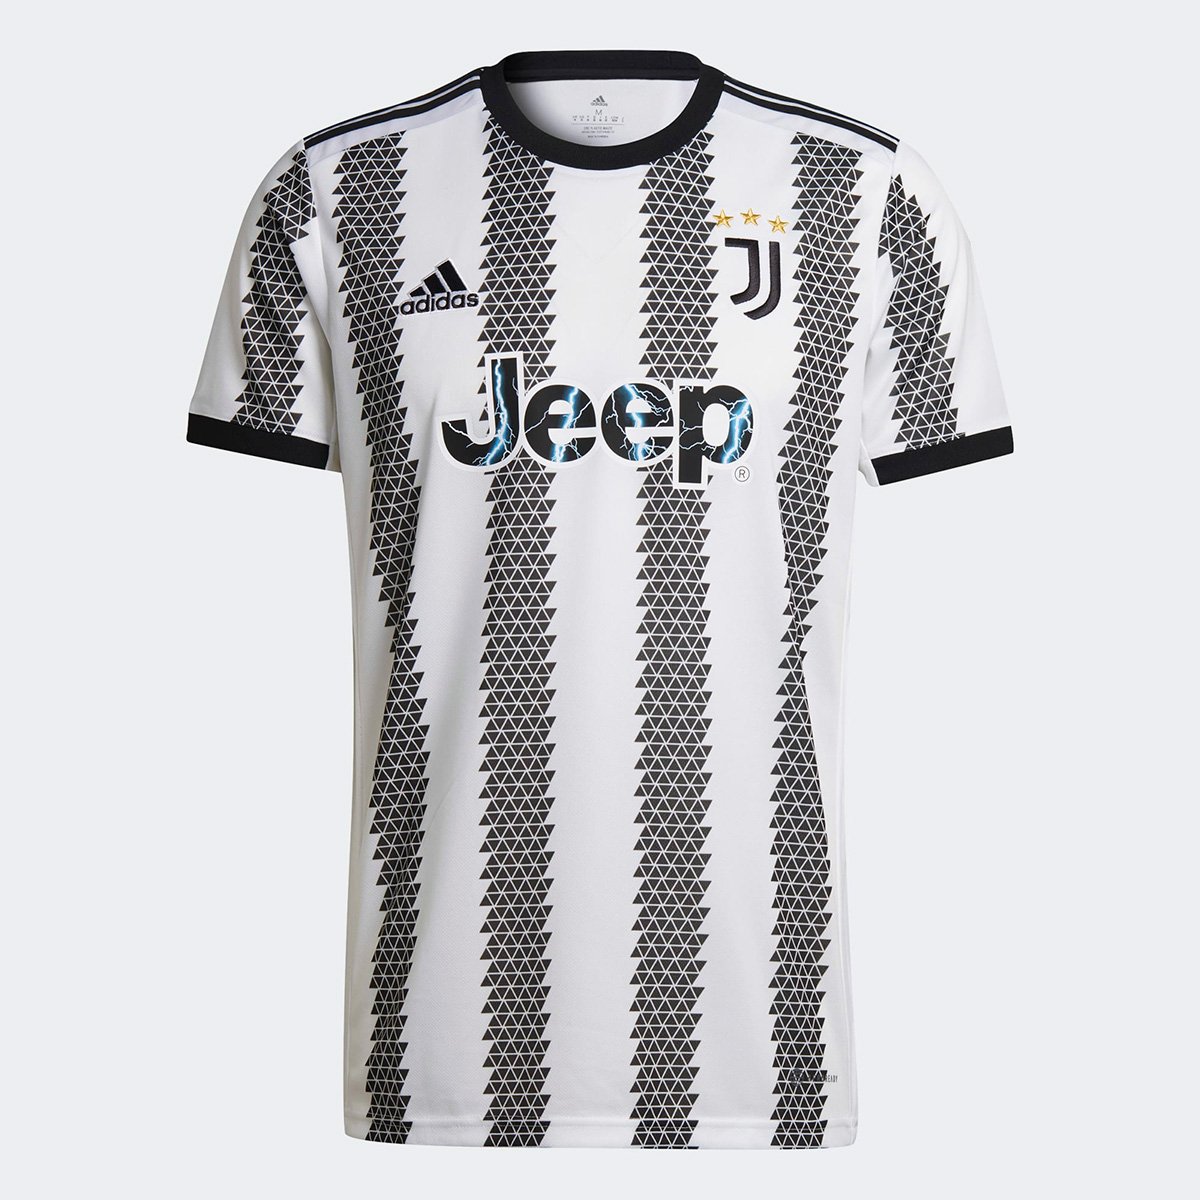 Camisa Juventus Home 22/23 s/n° Torcedor Adidas Masculina - Branco+Preto